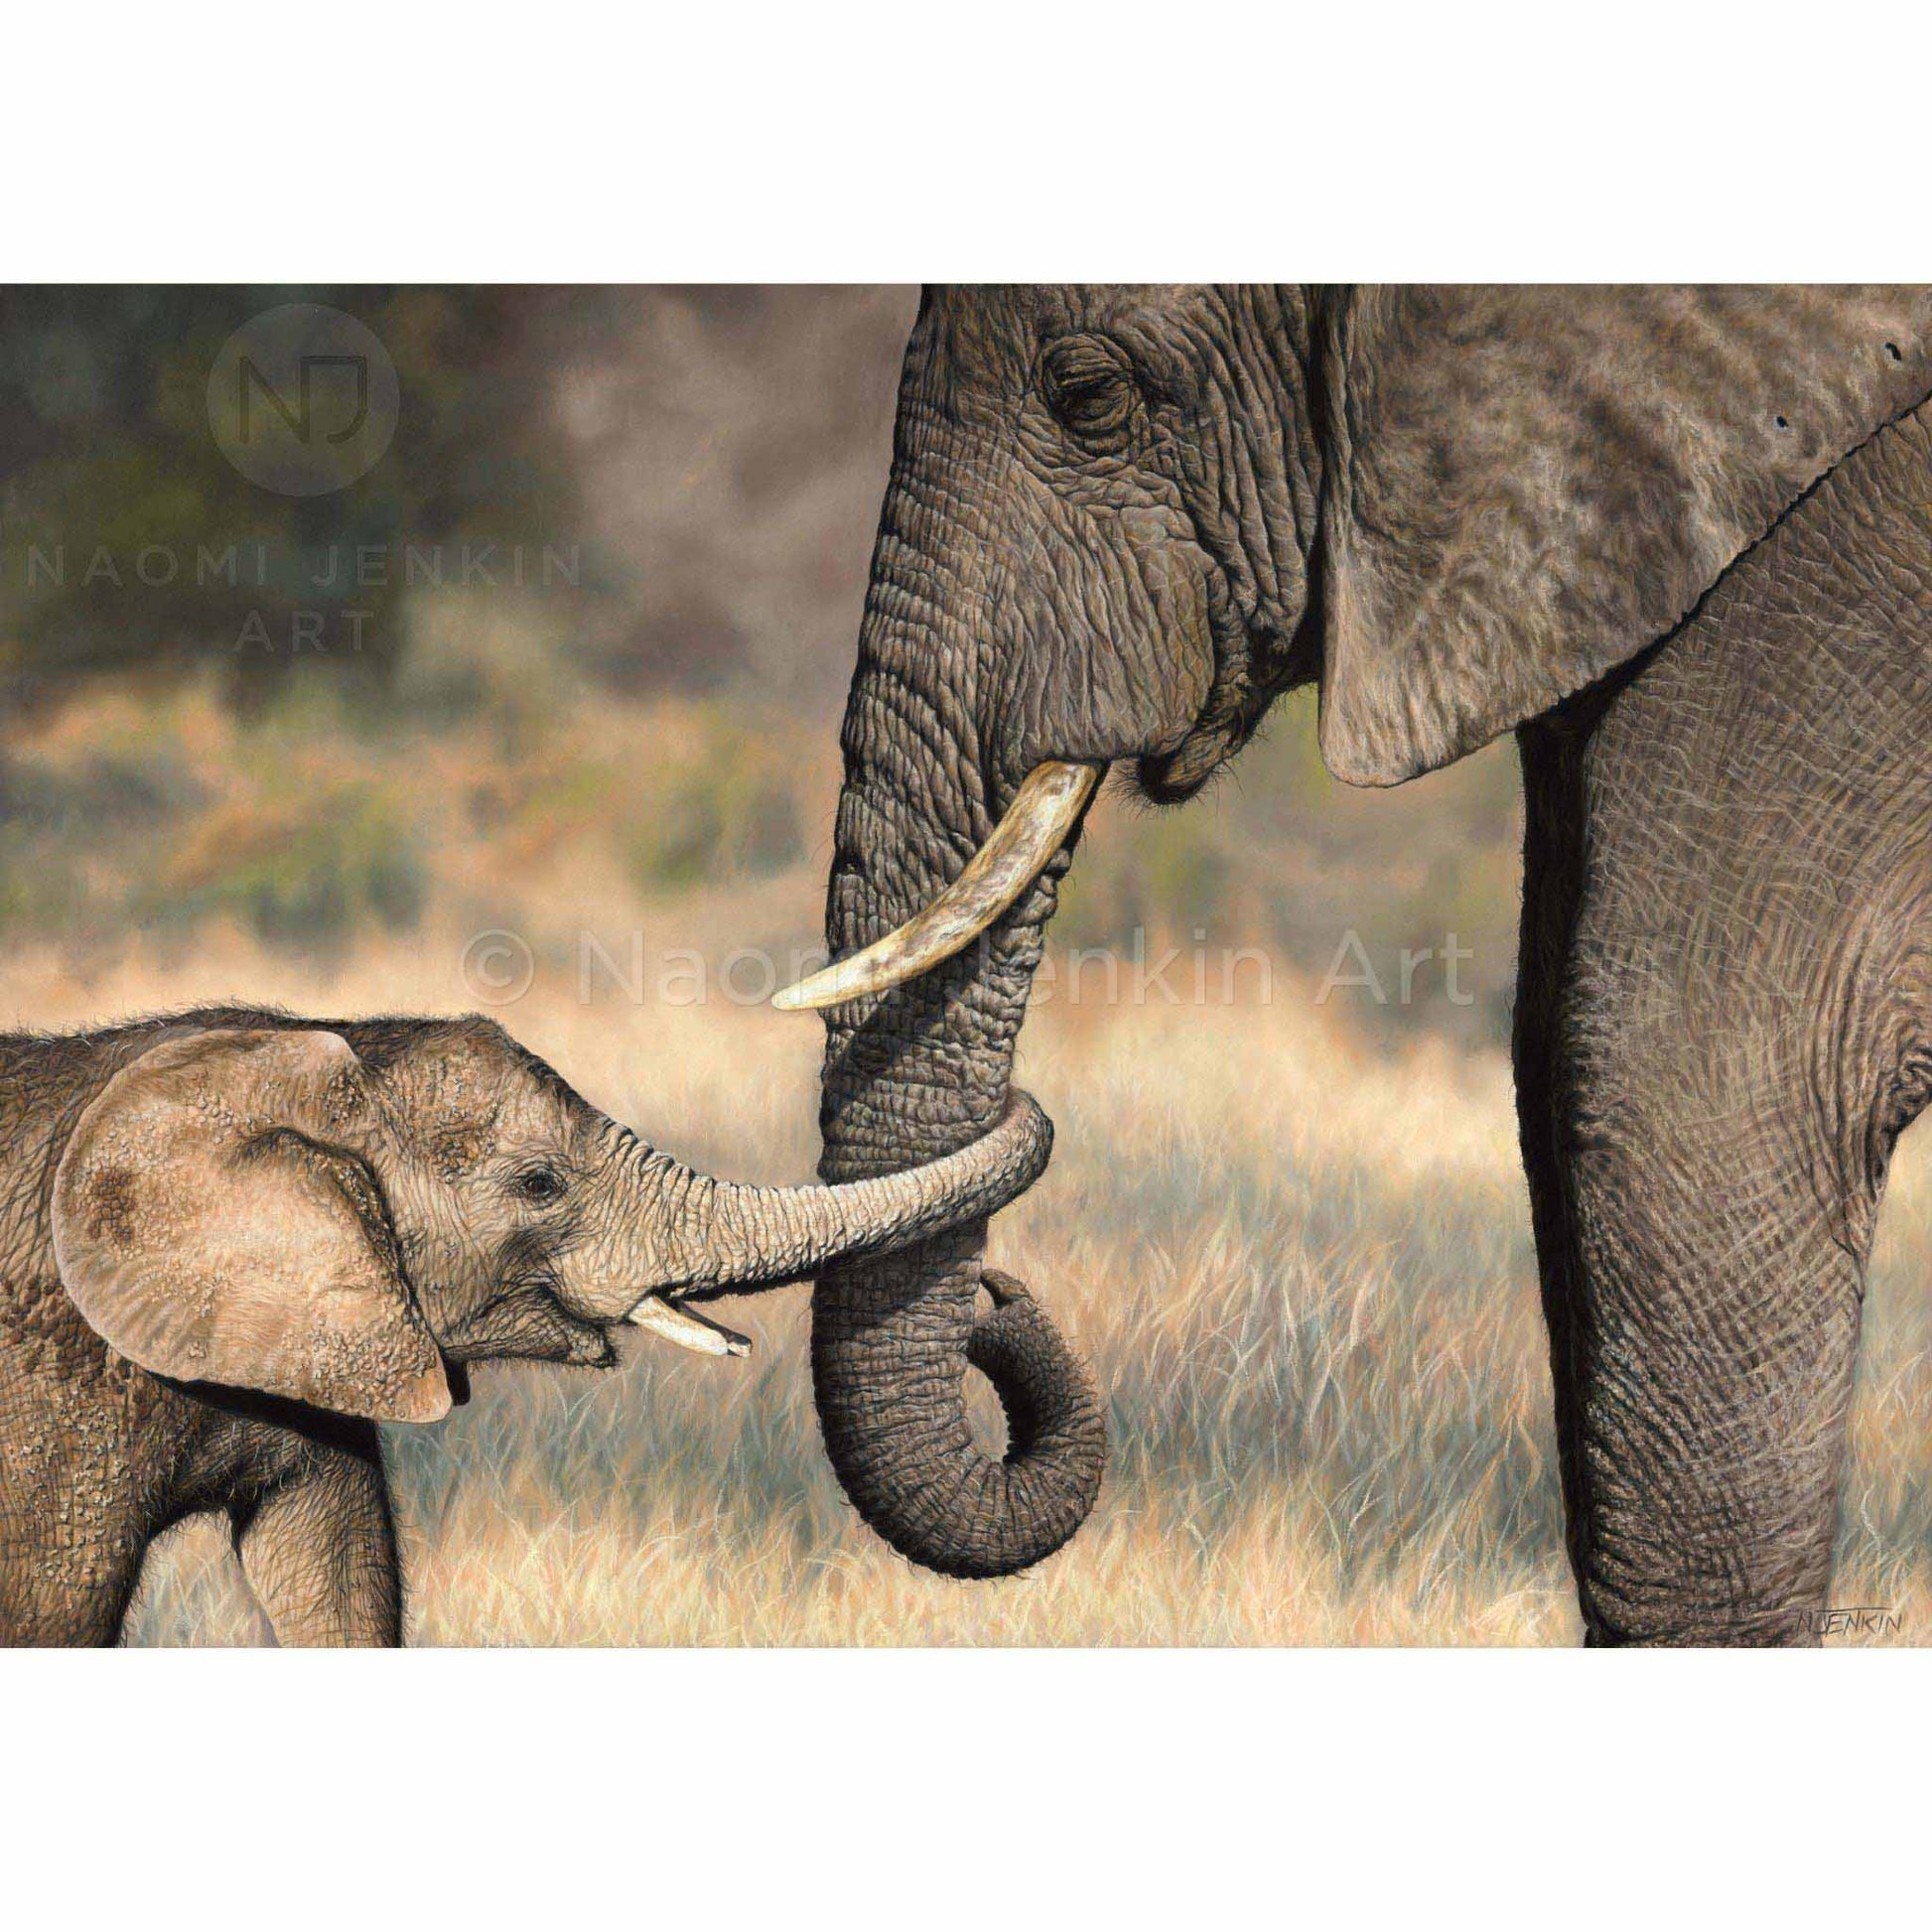 Elephant mum and calf art print by wildlife artist Naomi Jenkin